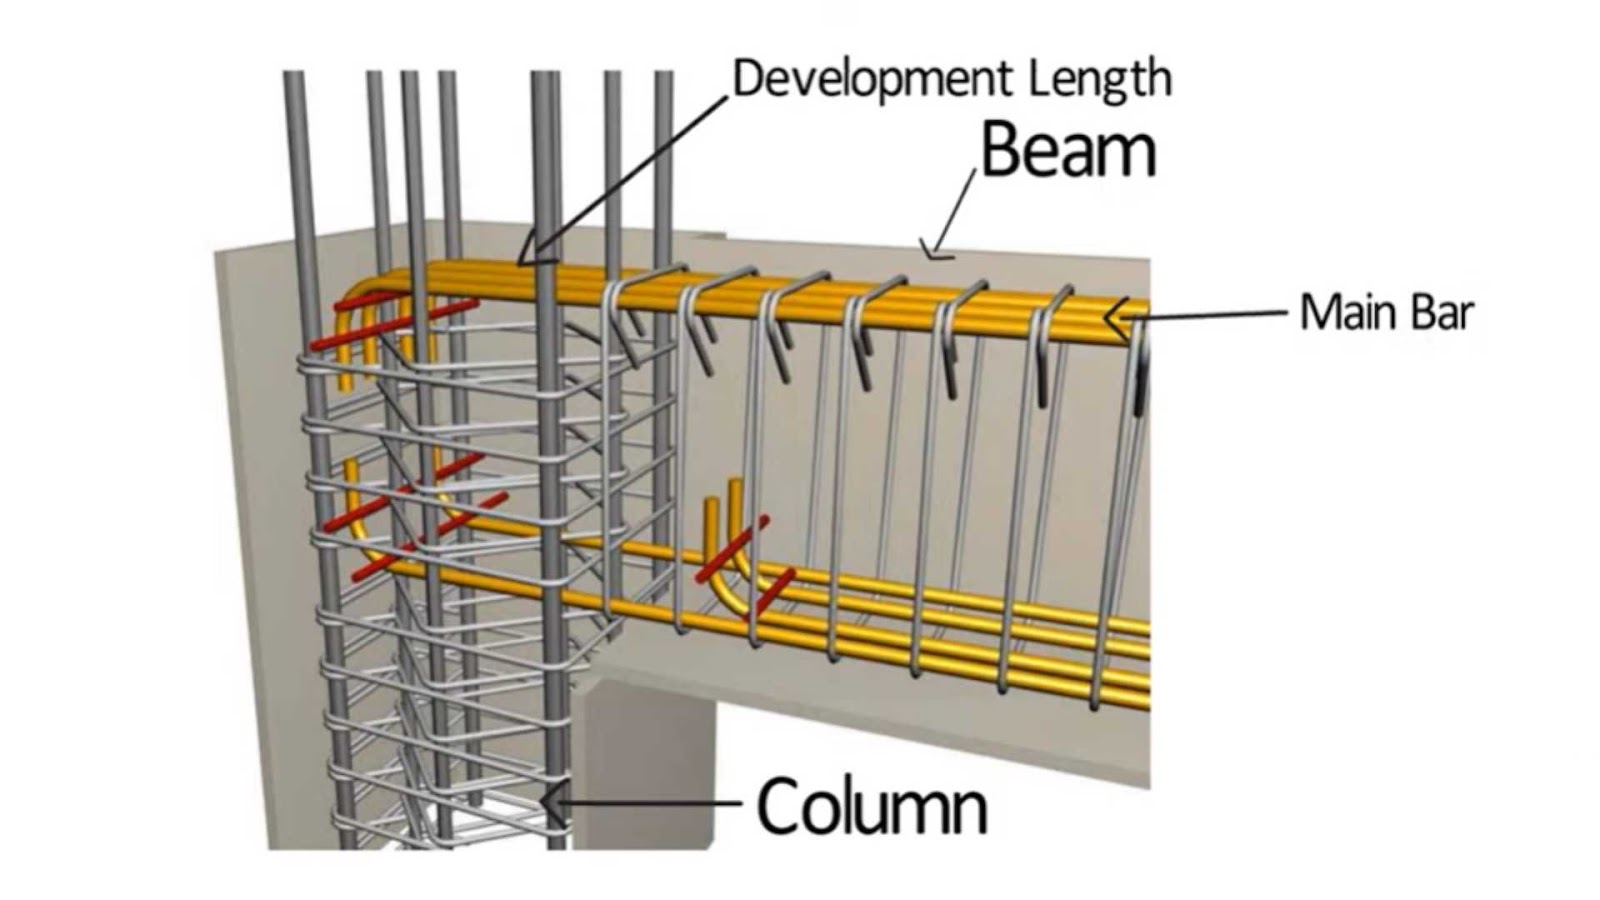 Development length in the column